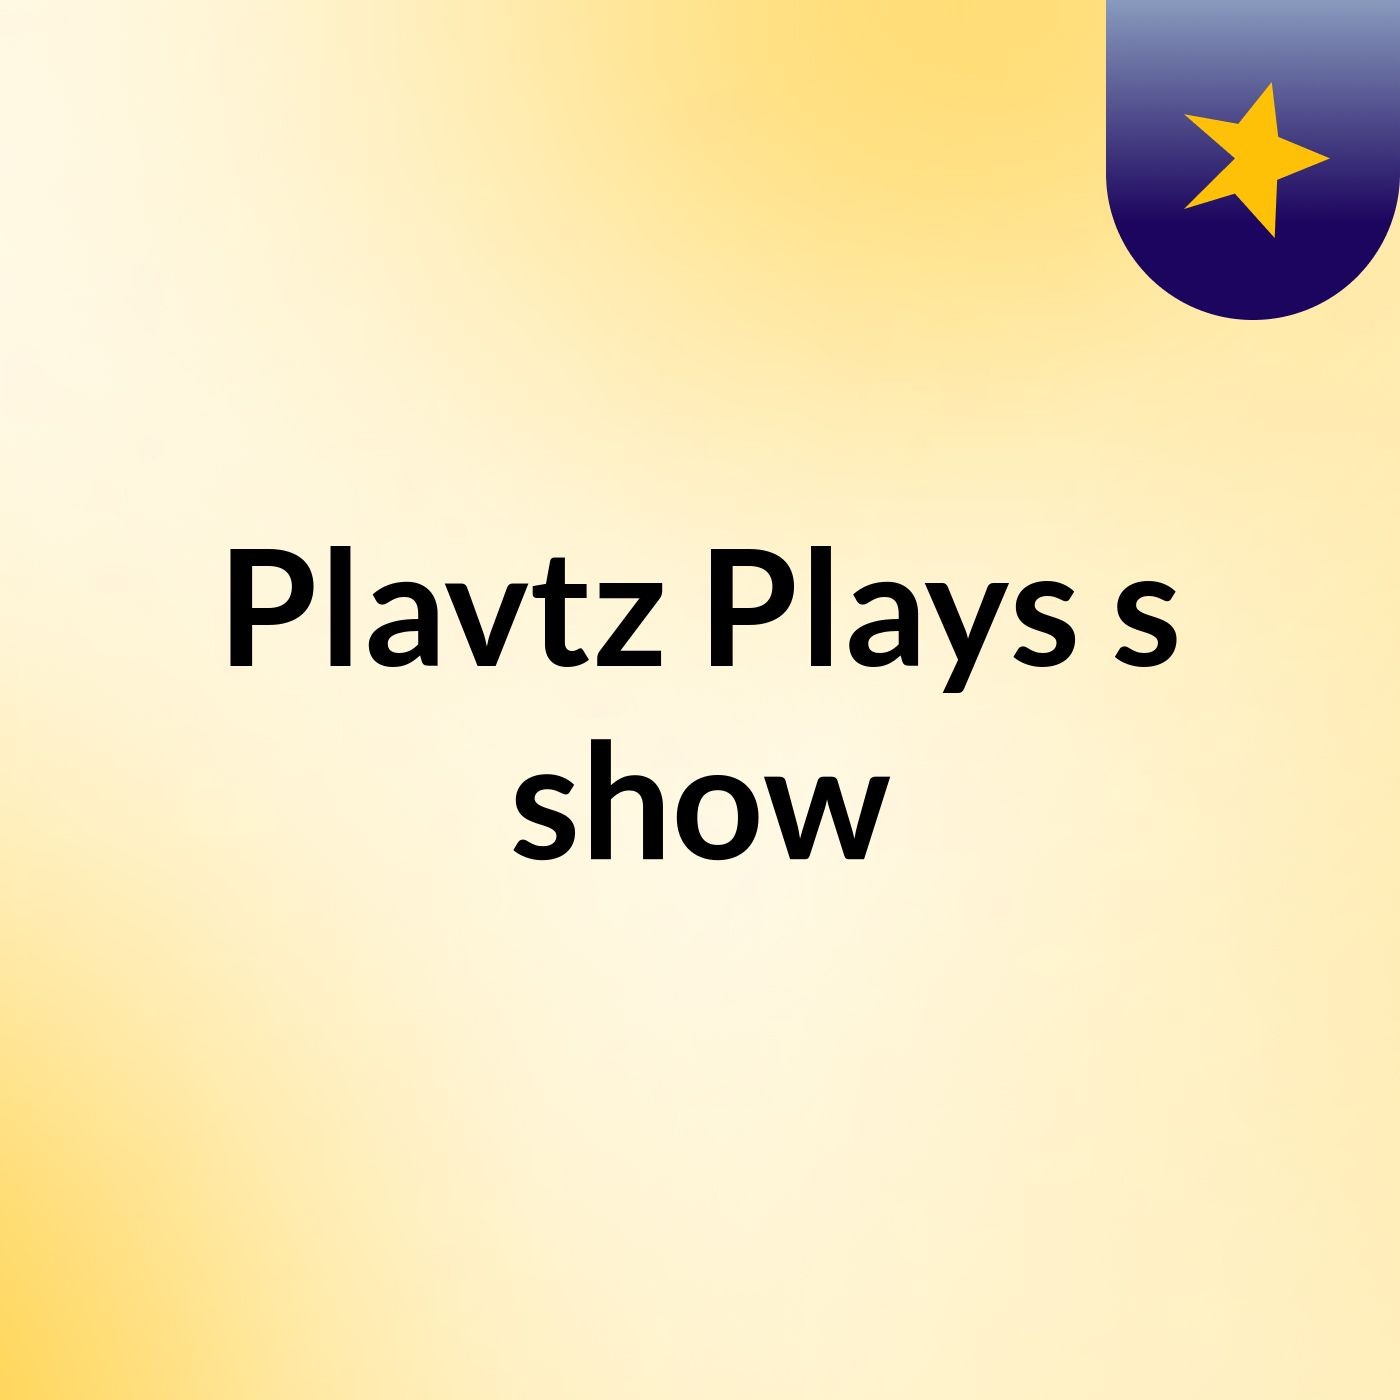 Plavtz Plays's show